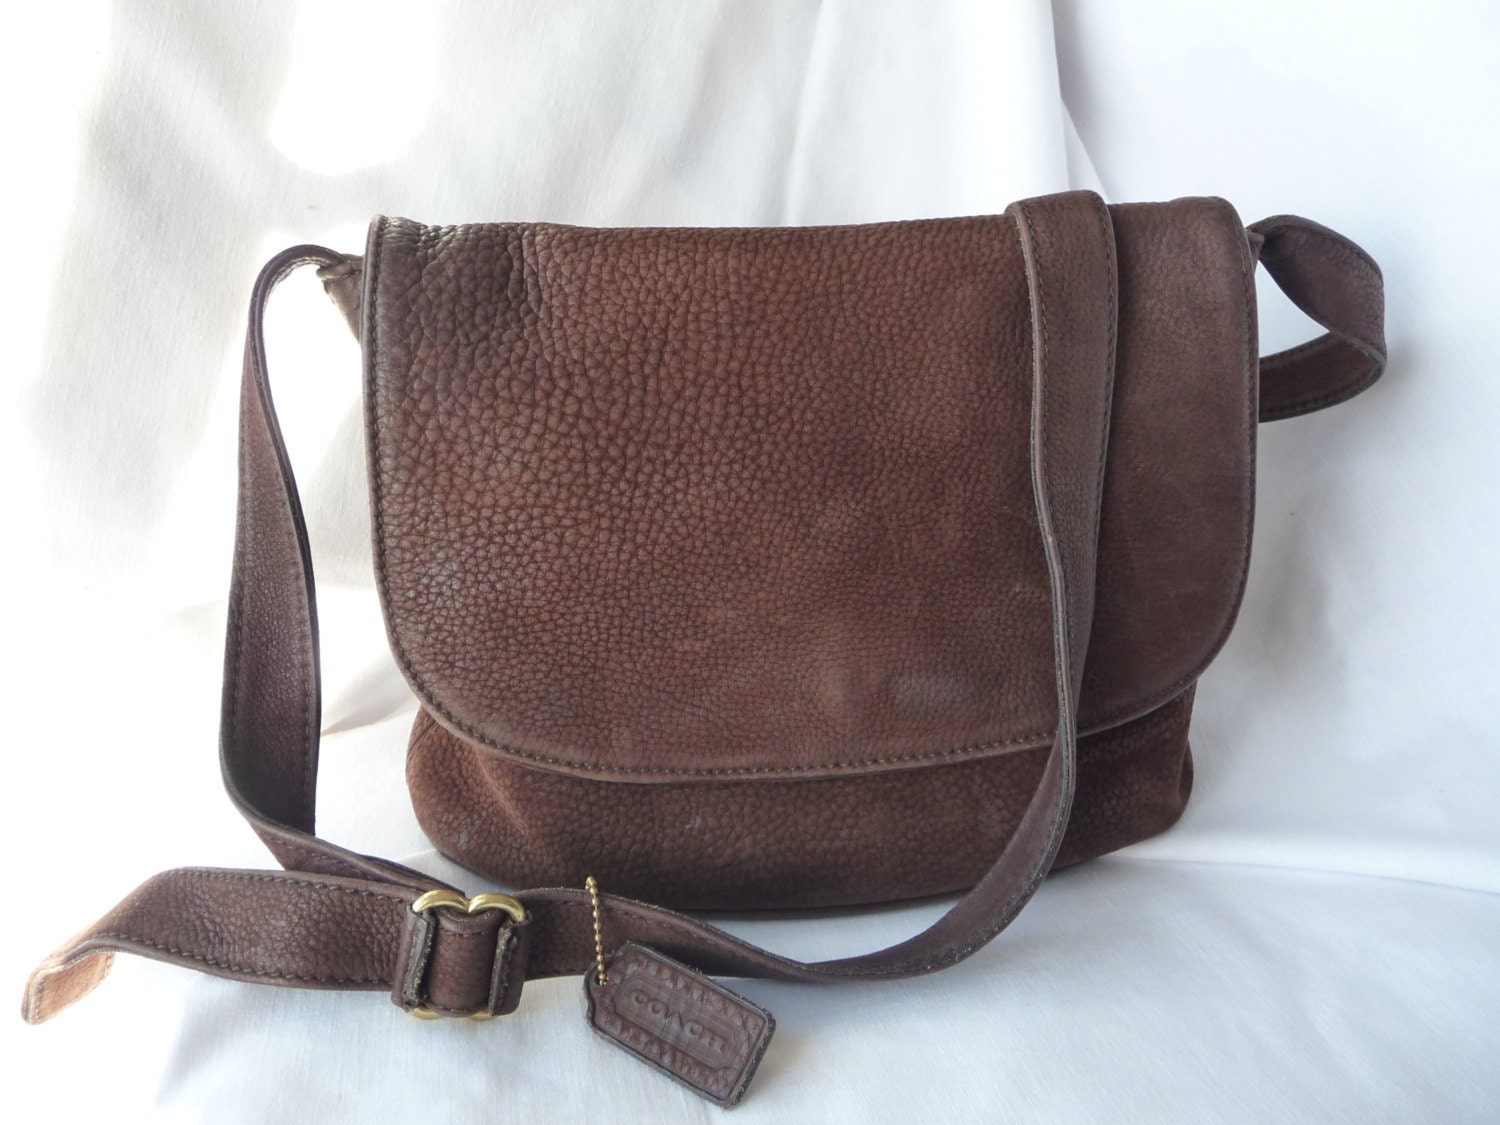 Vintage COACH Large Bucket Messenger Bag in Brown Nubuc Pebble